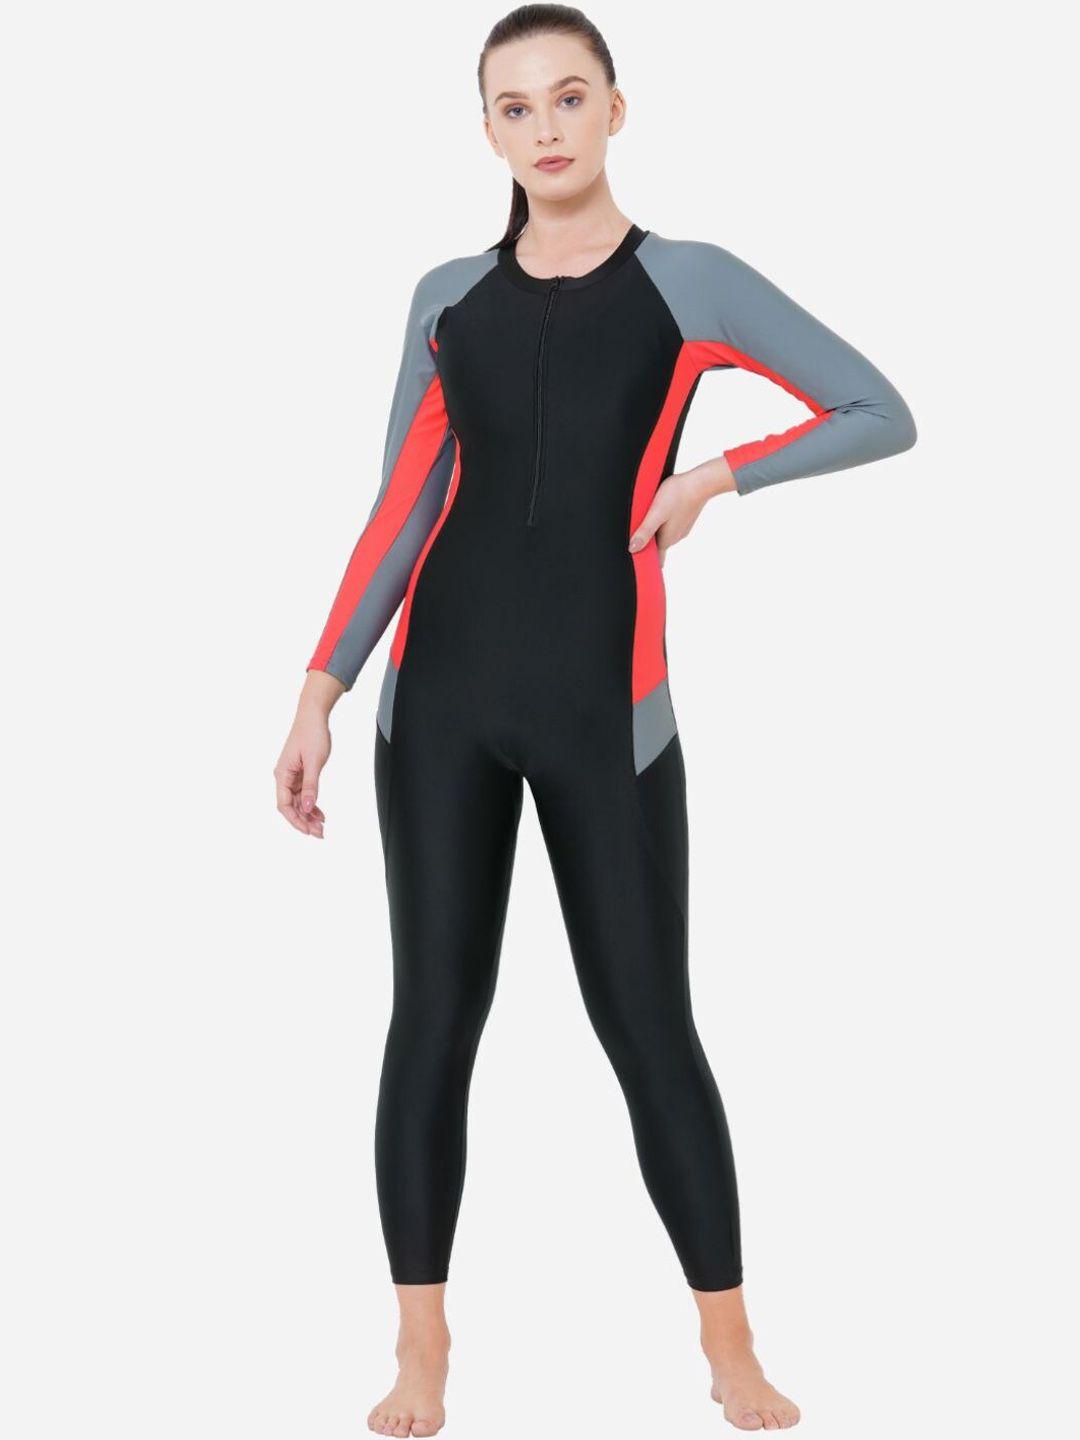 veloz colour-blocked anti-chafing padded legsuit swimwear